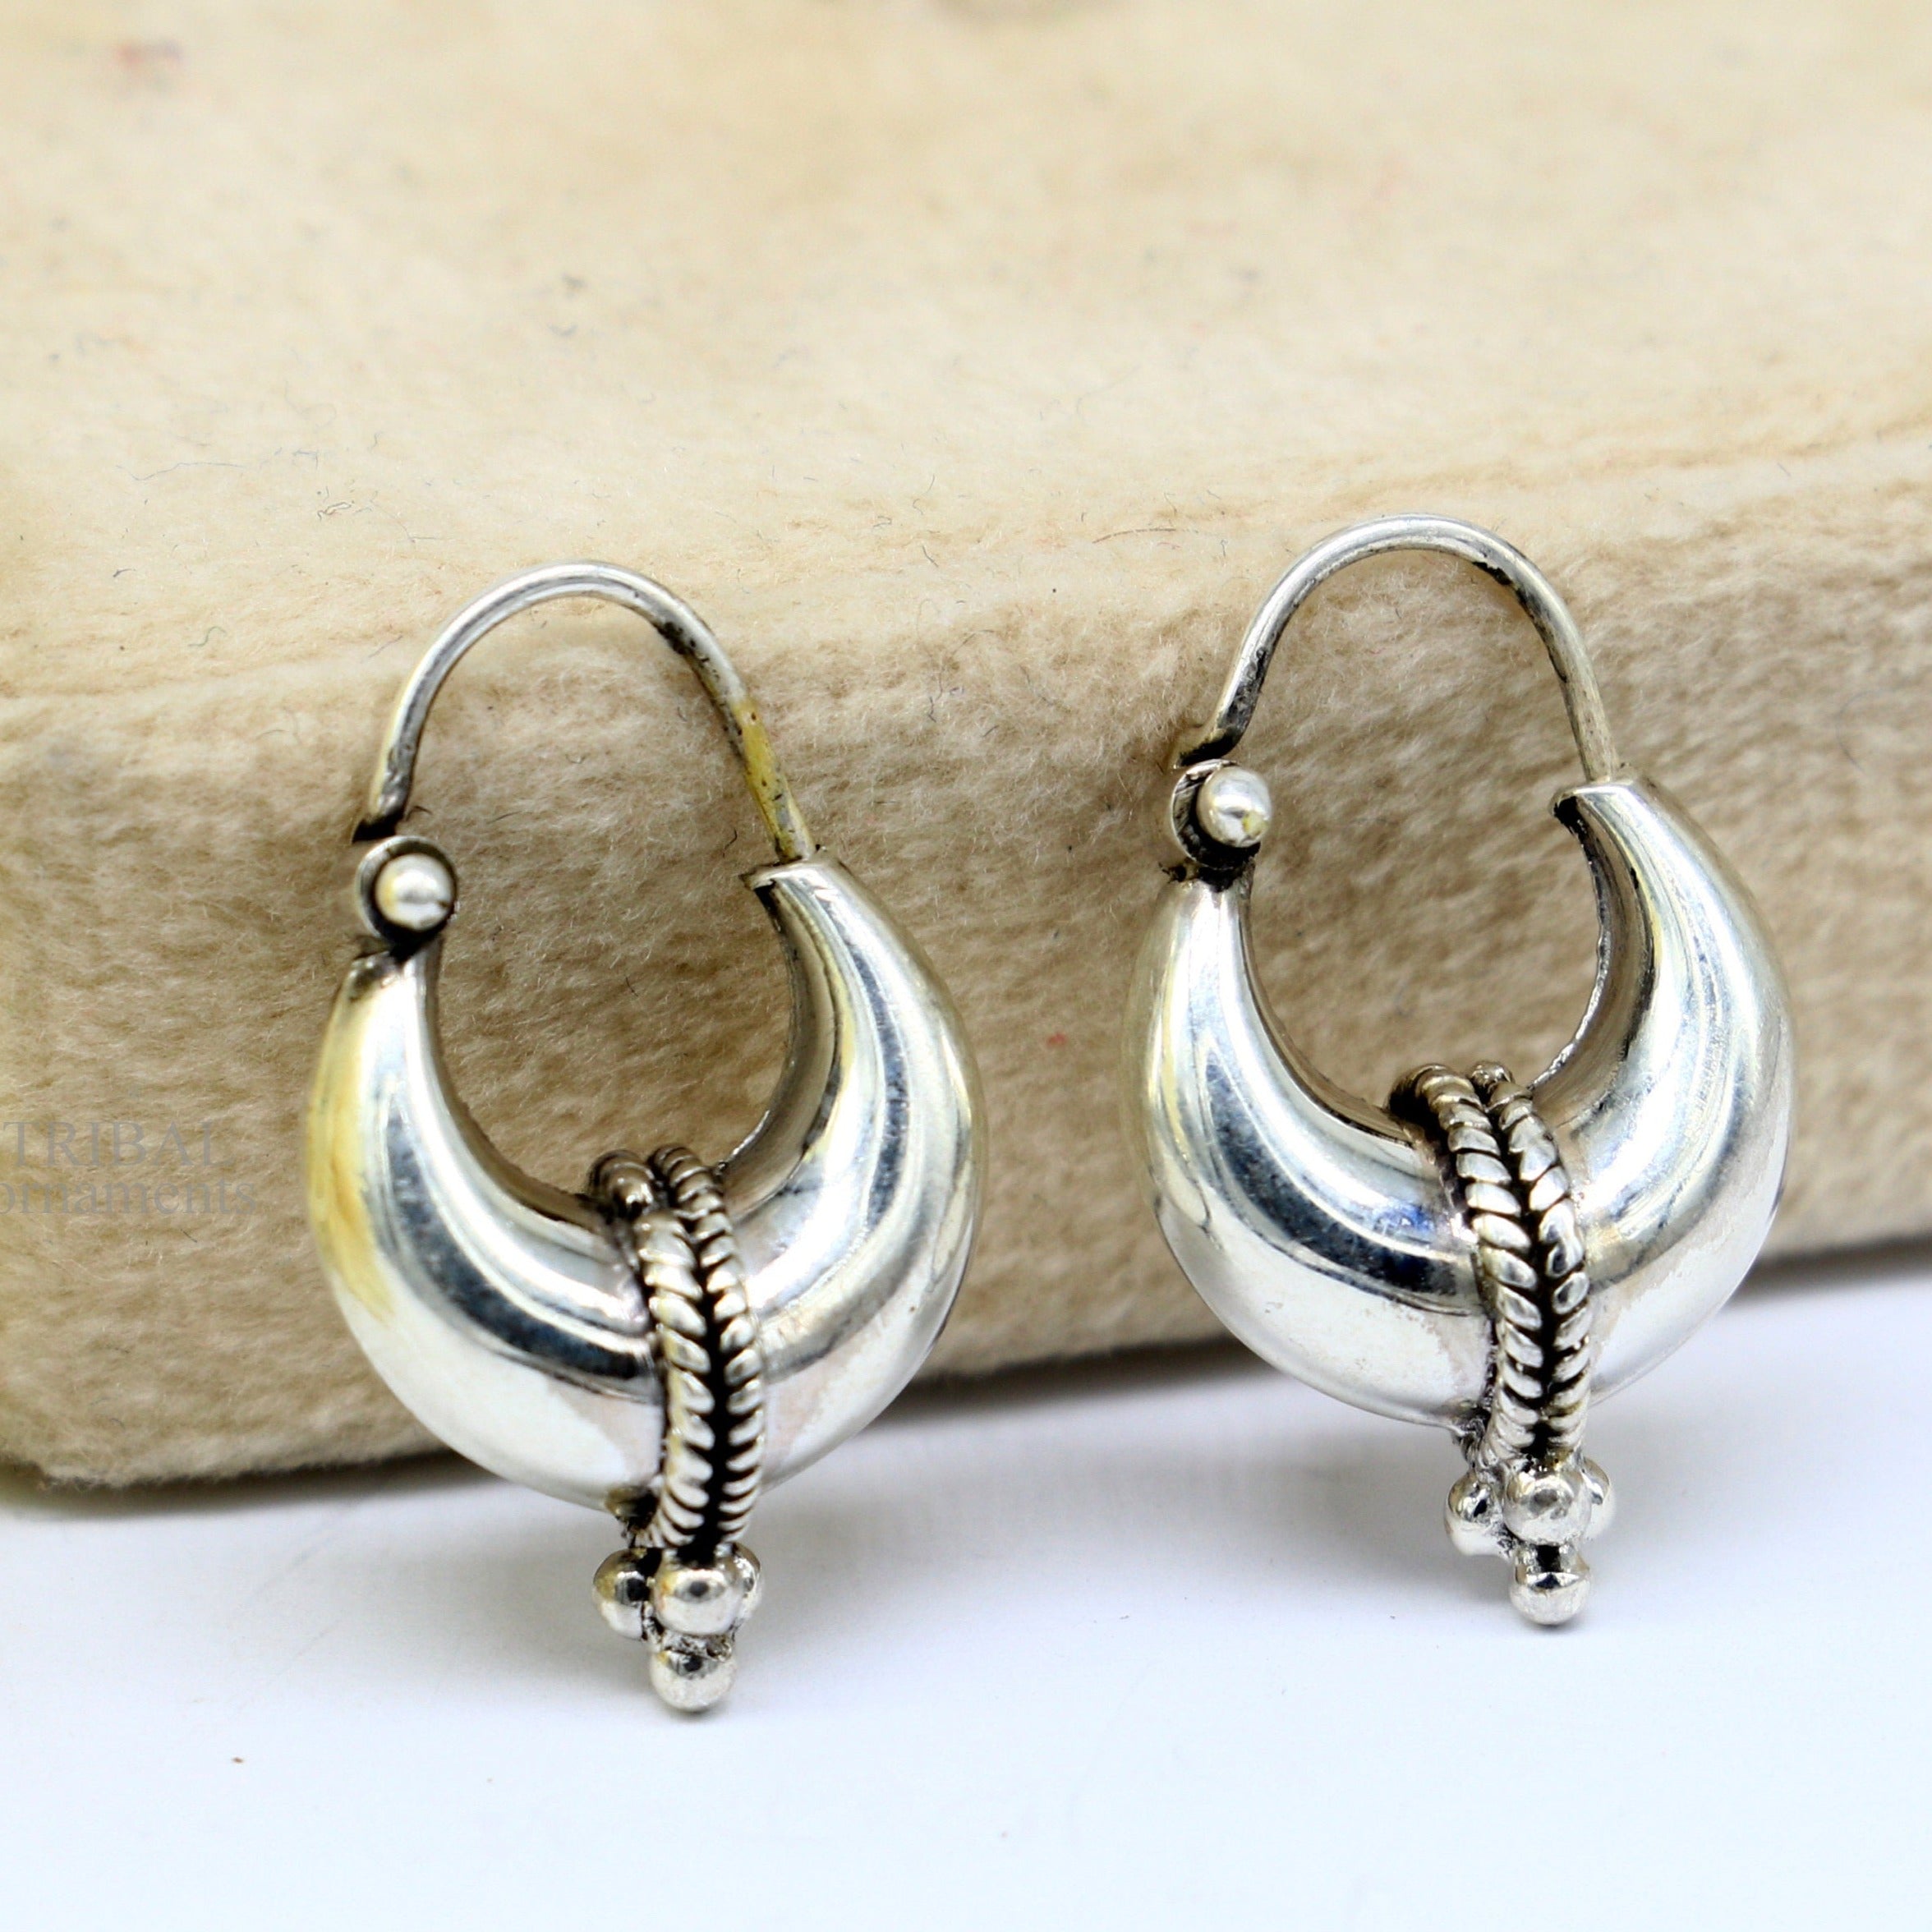 Rhine Earrings by Moonrise Jewelry